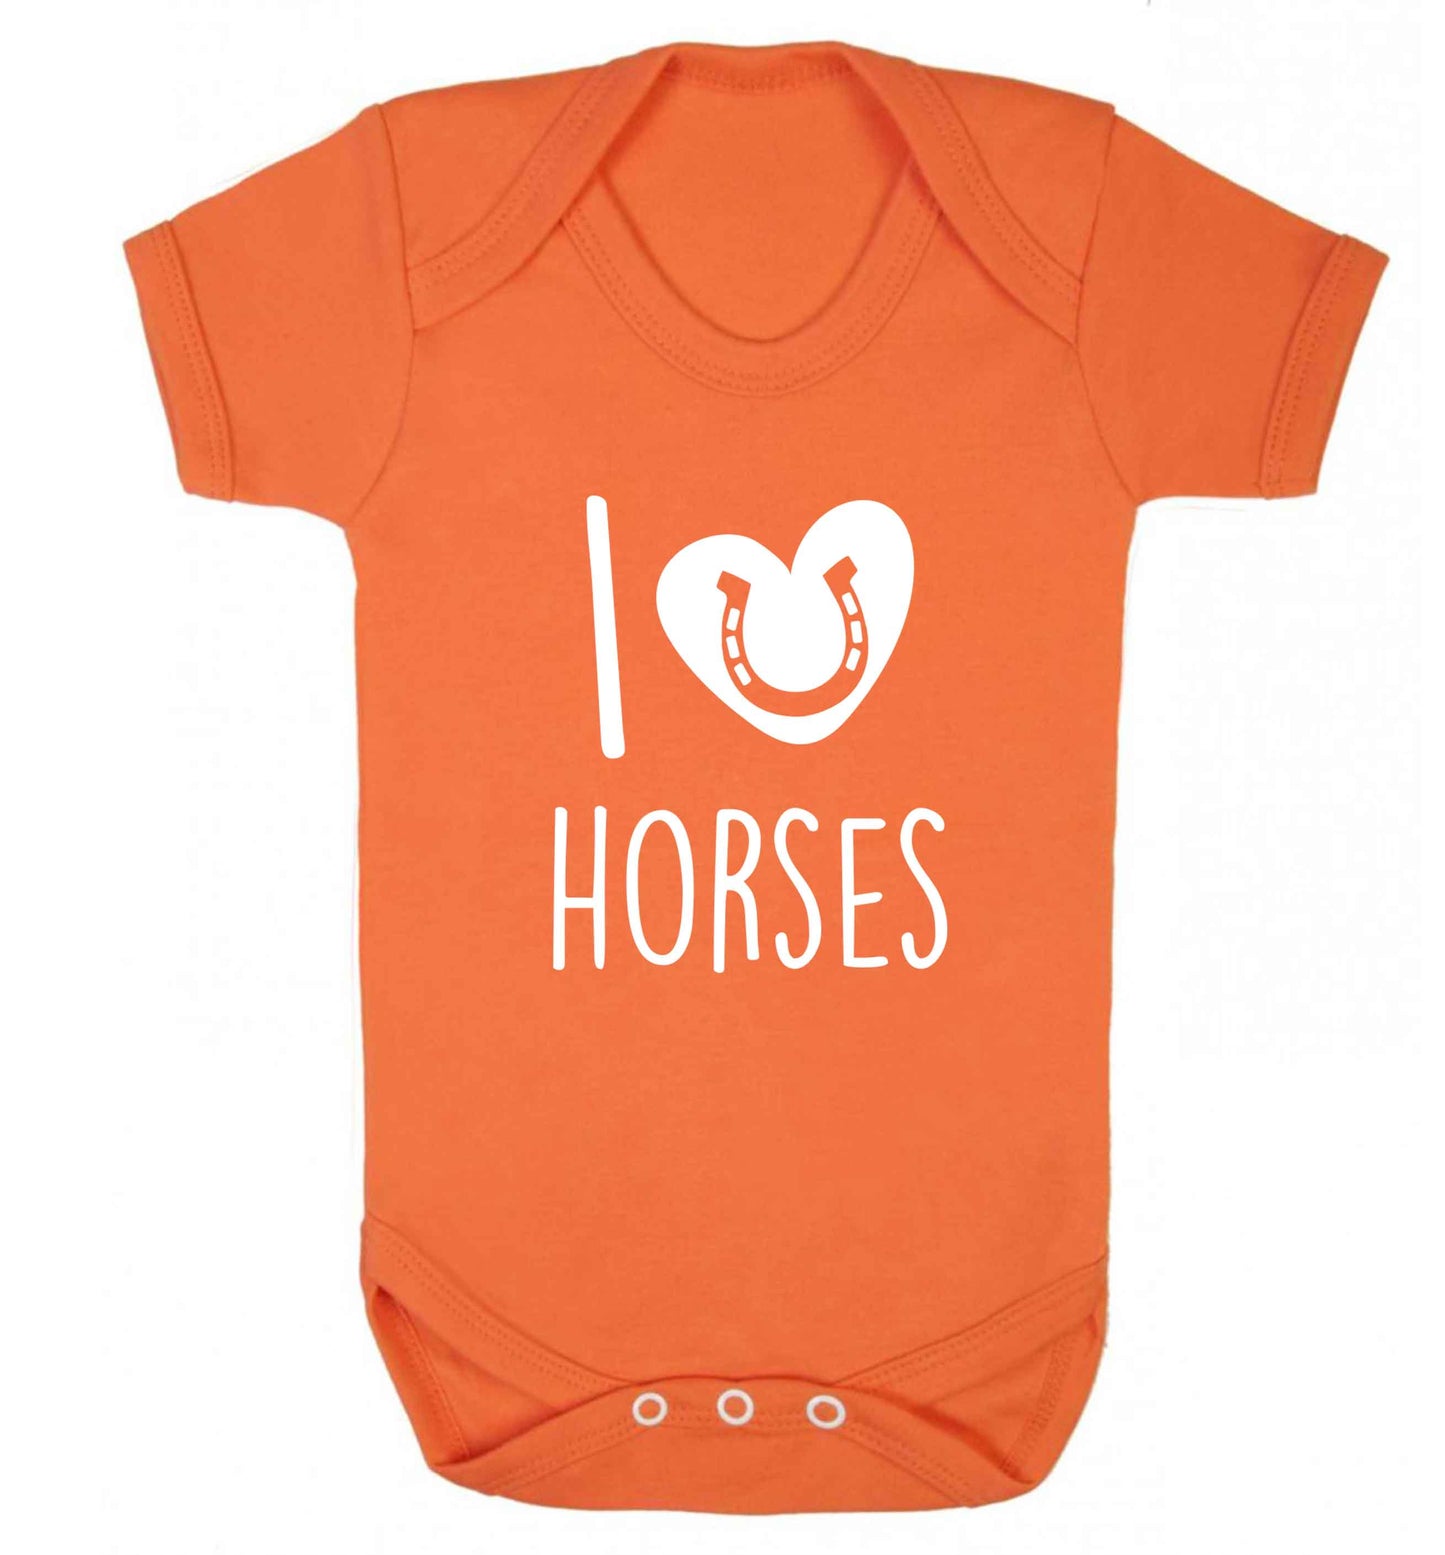 I love horses baby vest orange 18-24 months